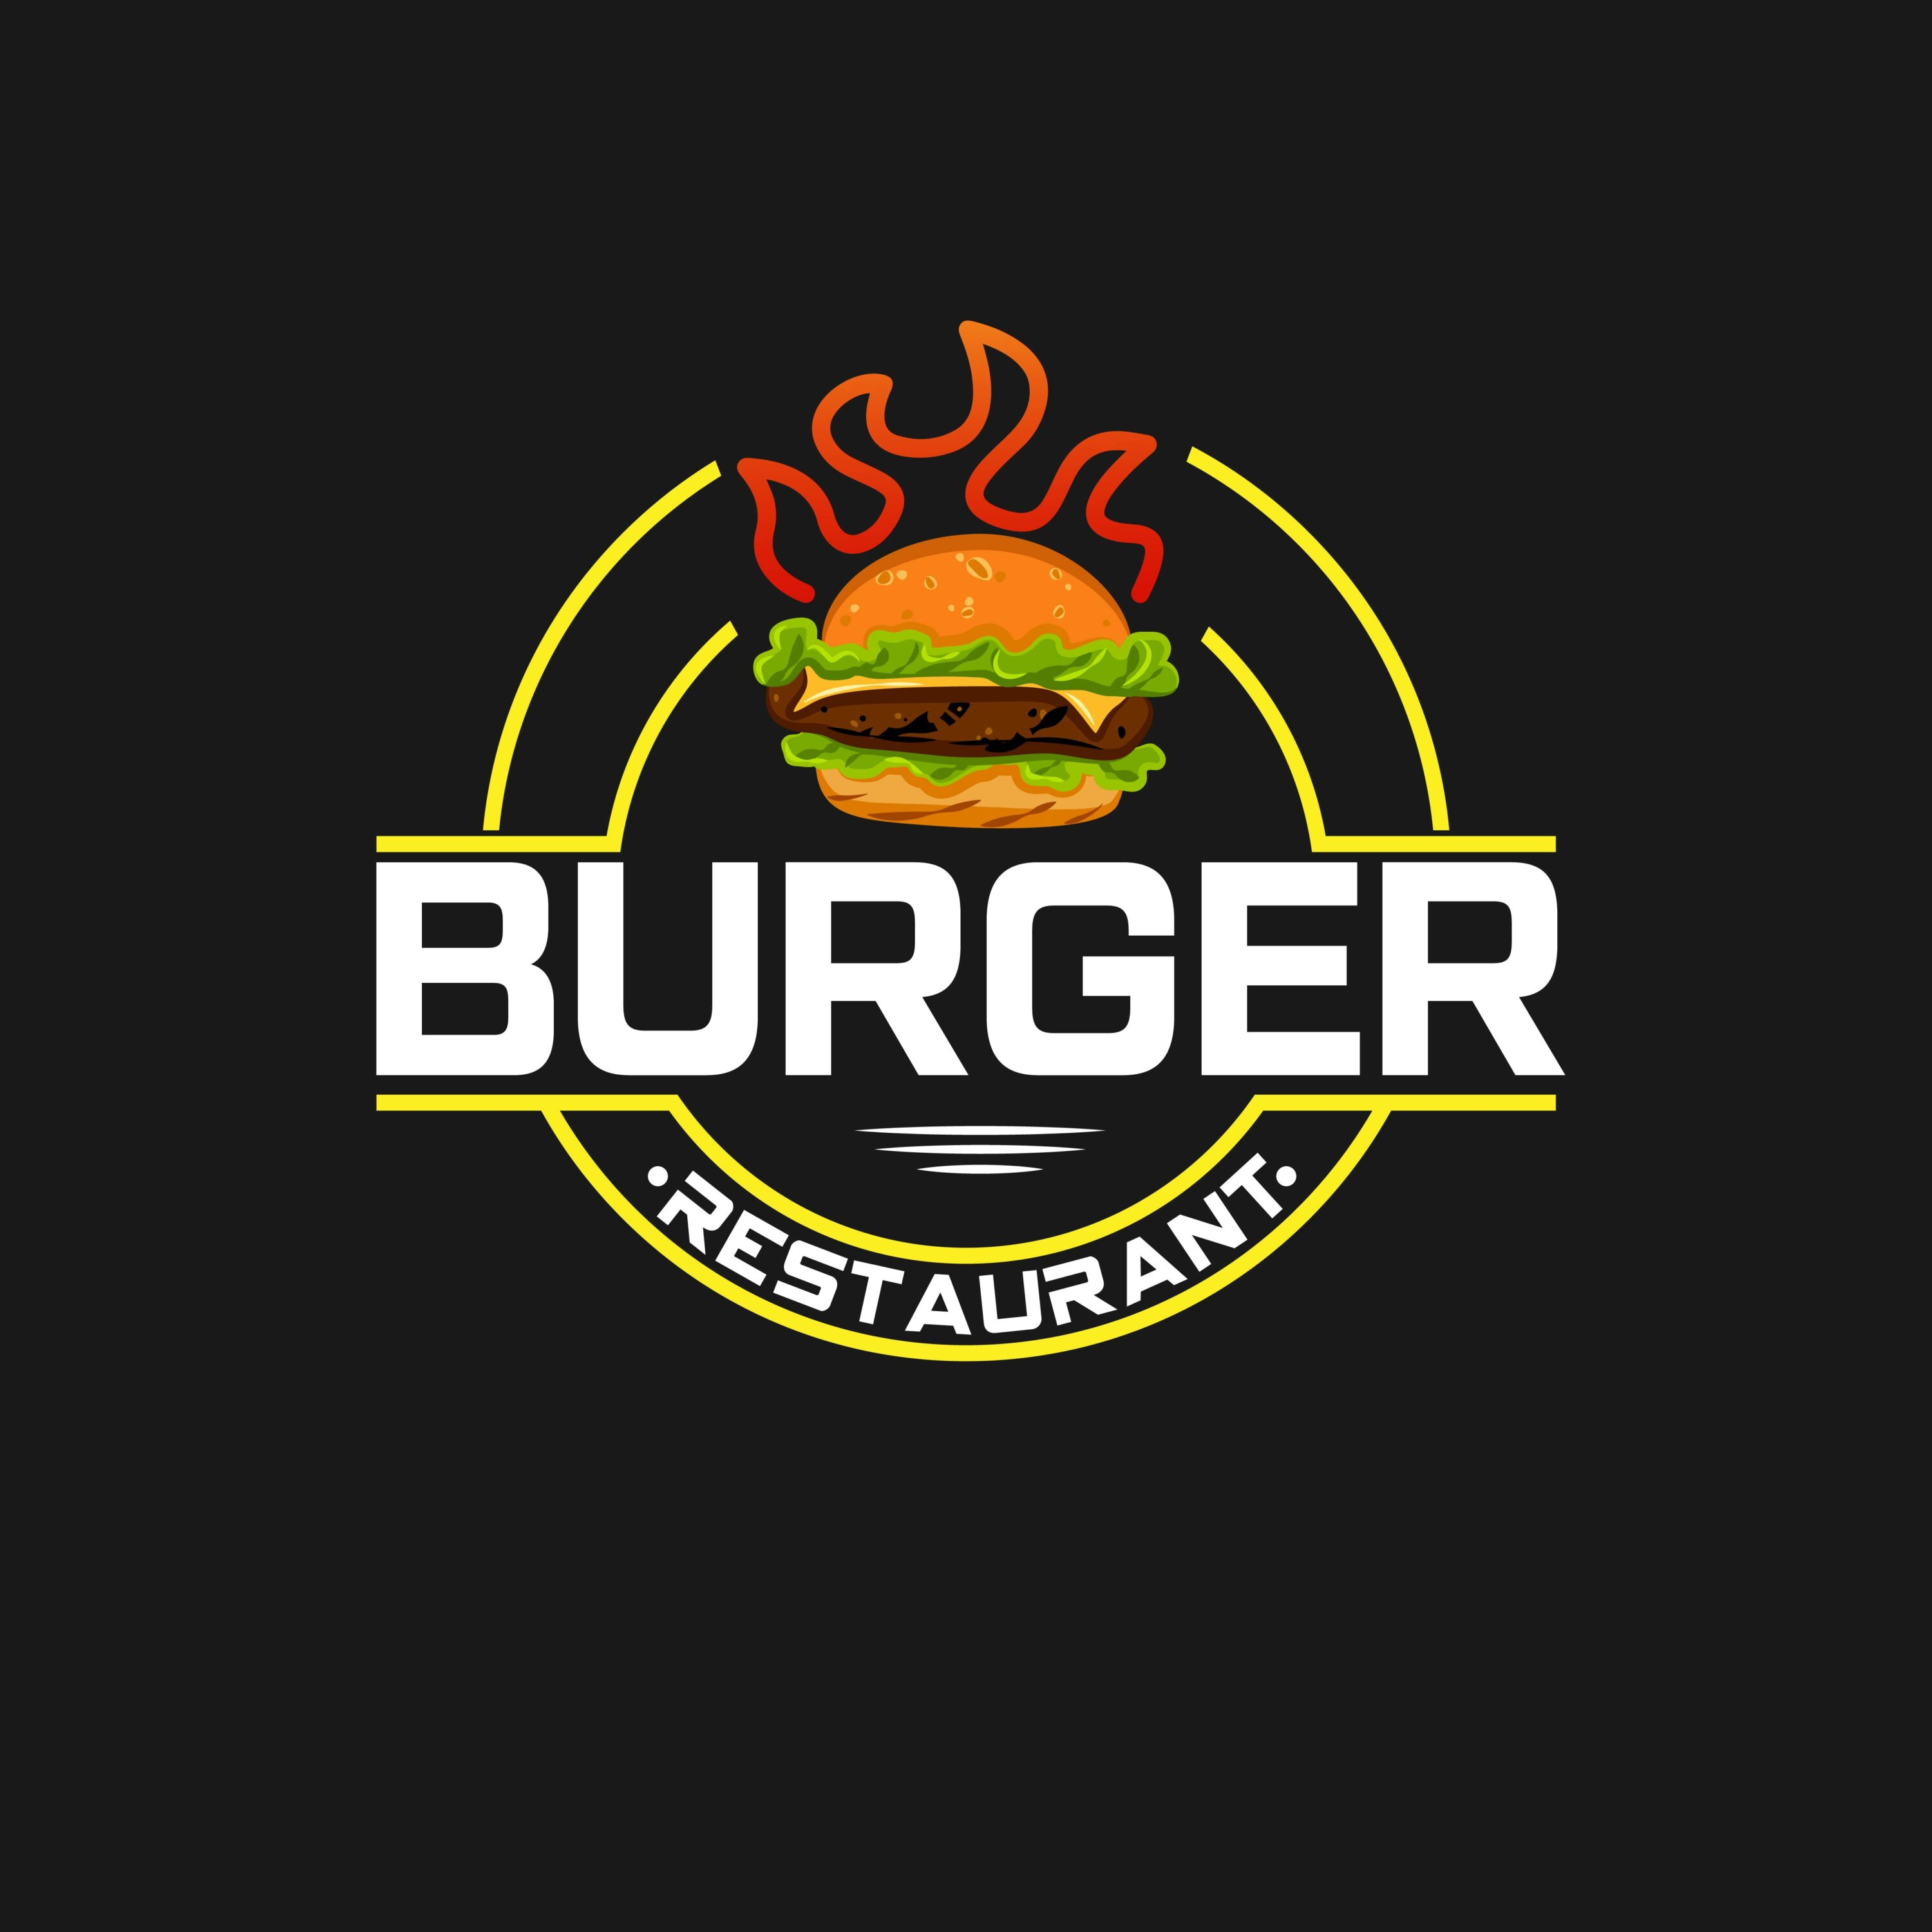 Restaurant Logo cover image.